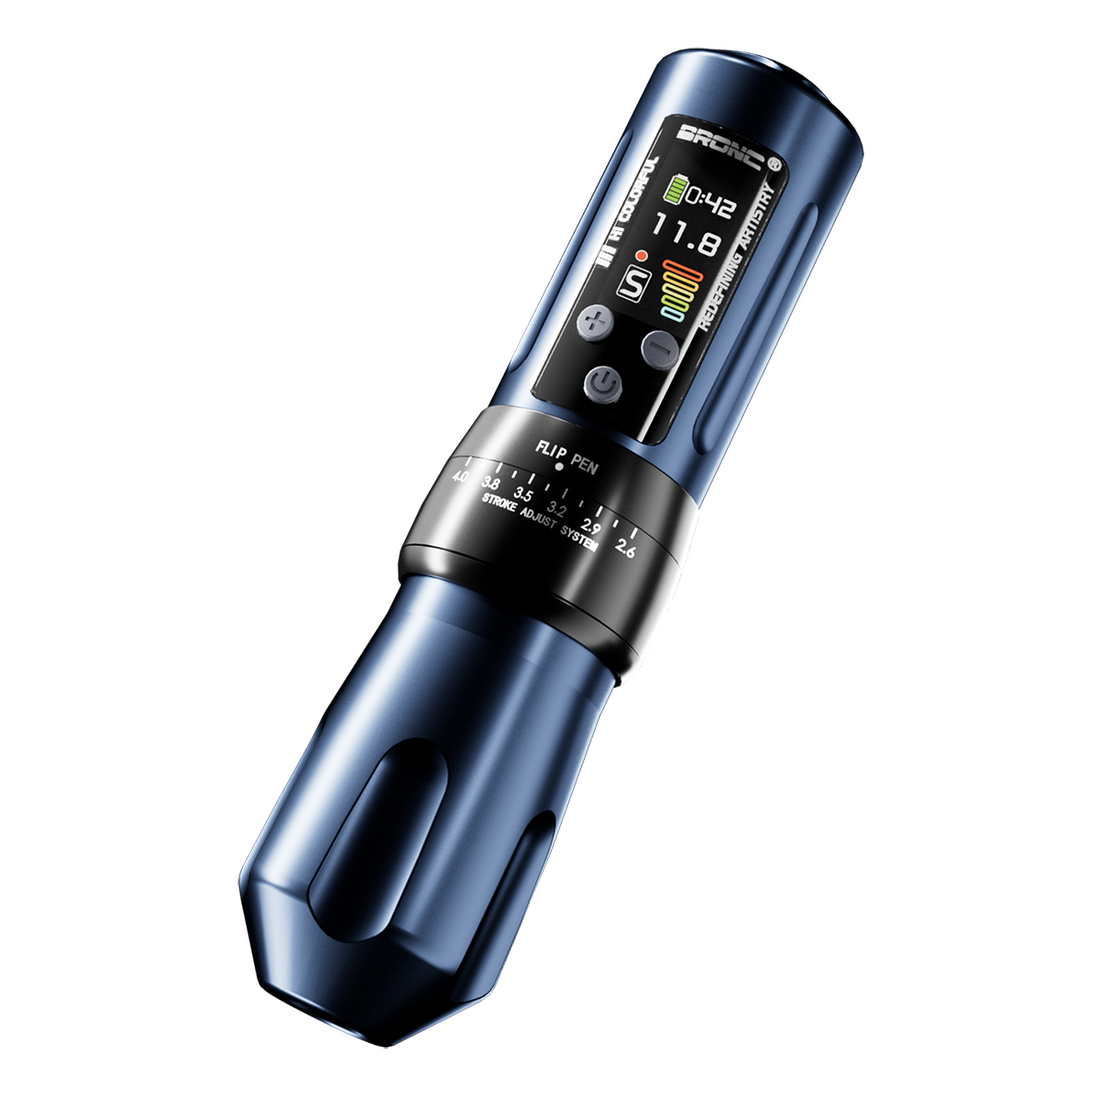 2024 BRONC X2 Adjustable Wireless Pen